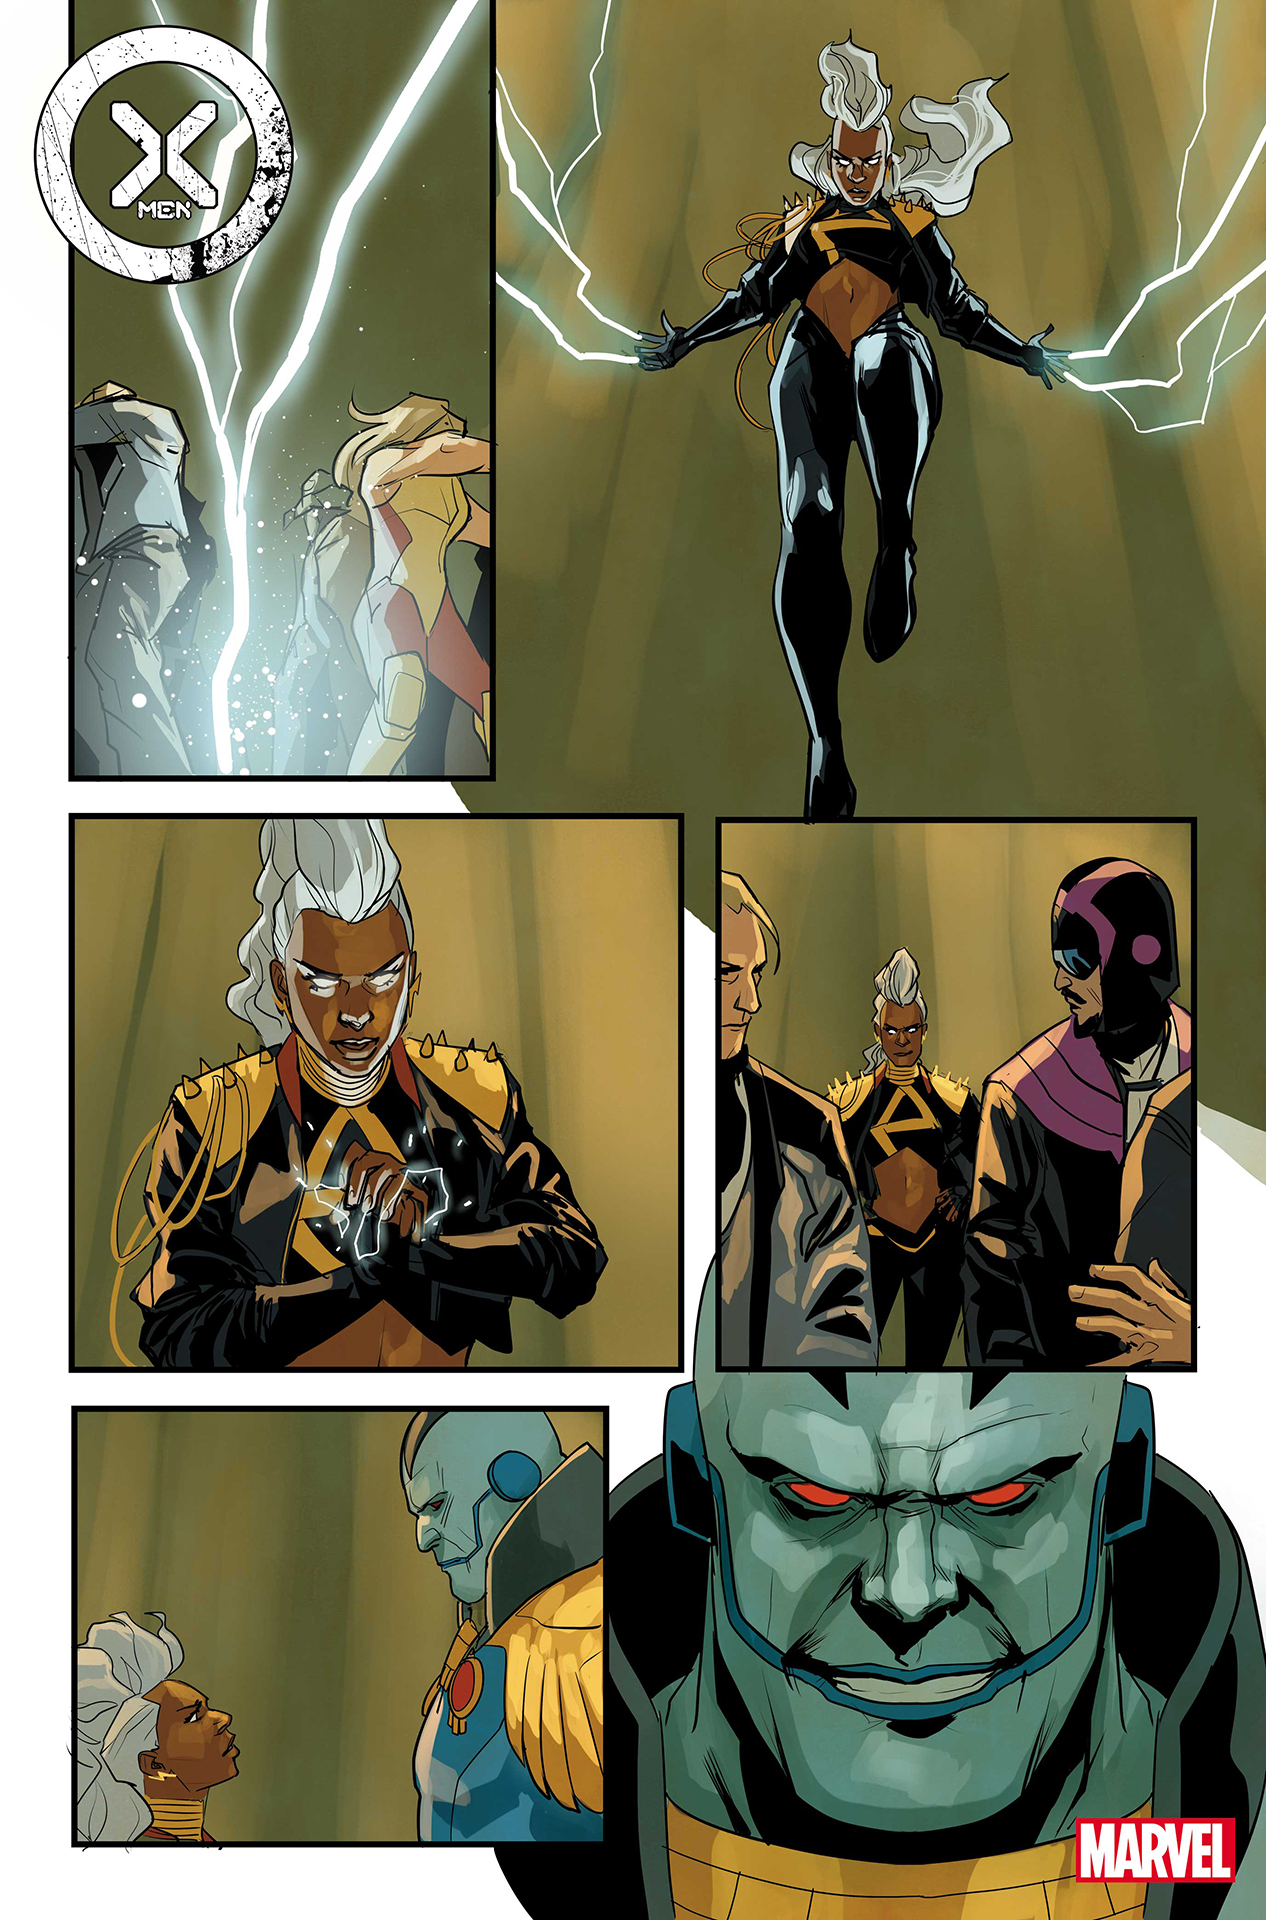 X-Men #700 interior art